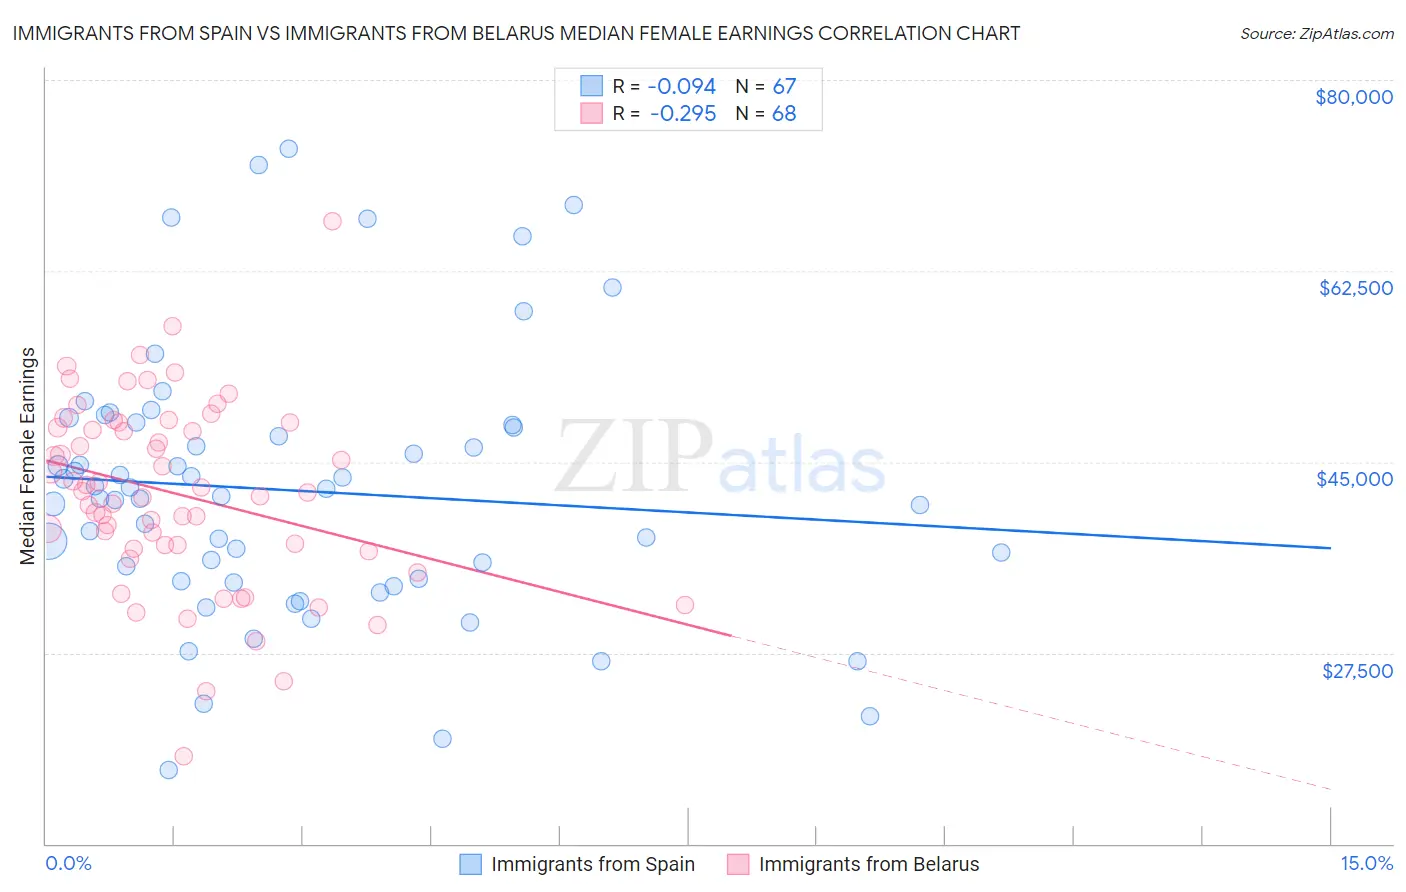 Immigrants from Spain vs Immigrants from Belarus Median Female Earnings